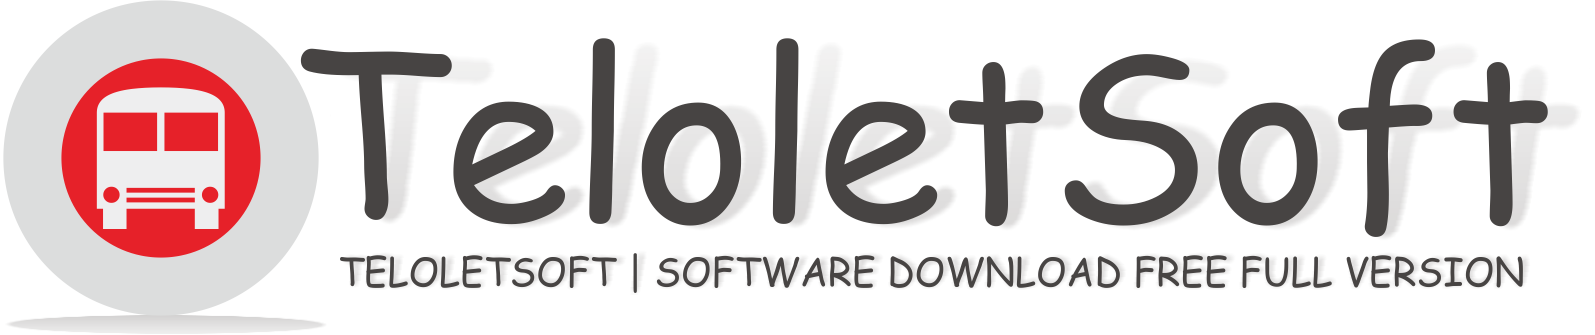 TeloletSoft | Software Download Free Full Version